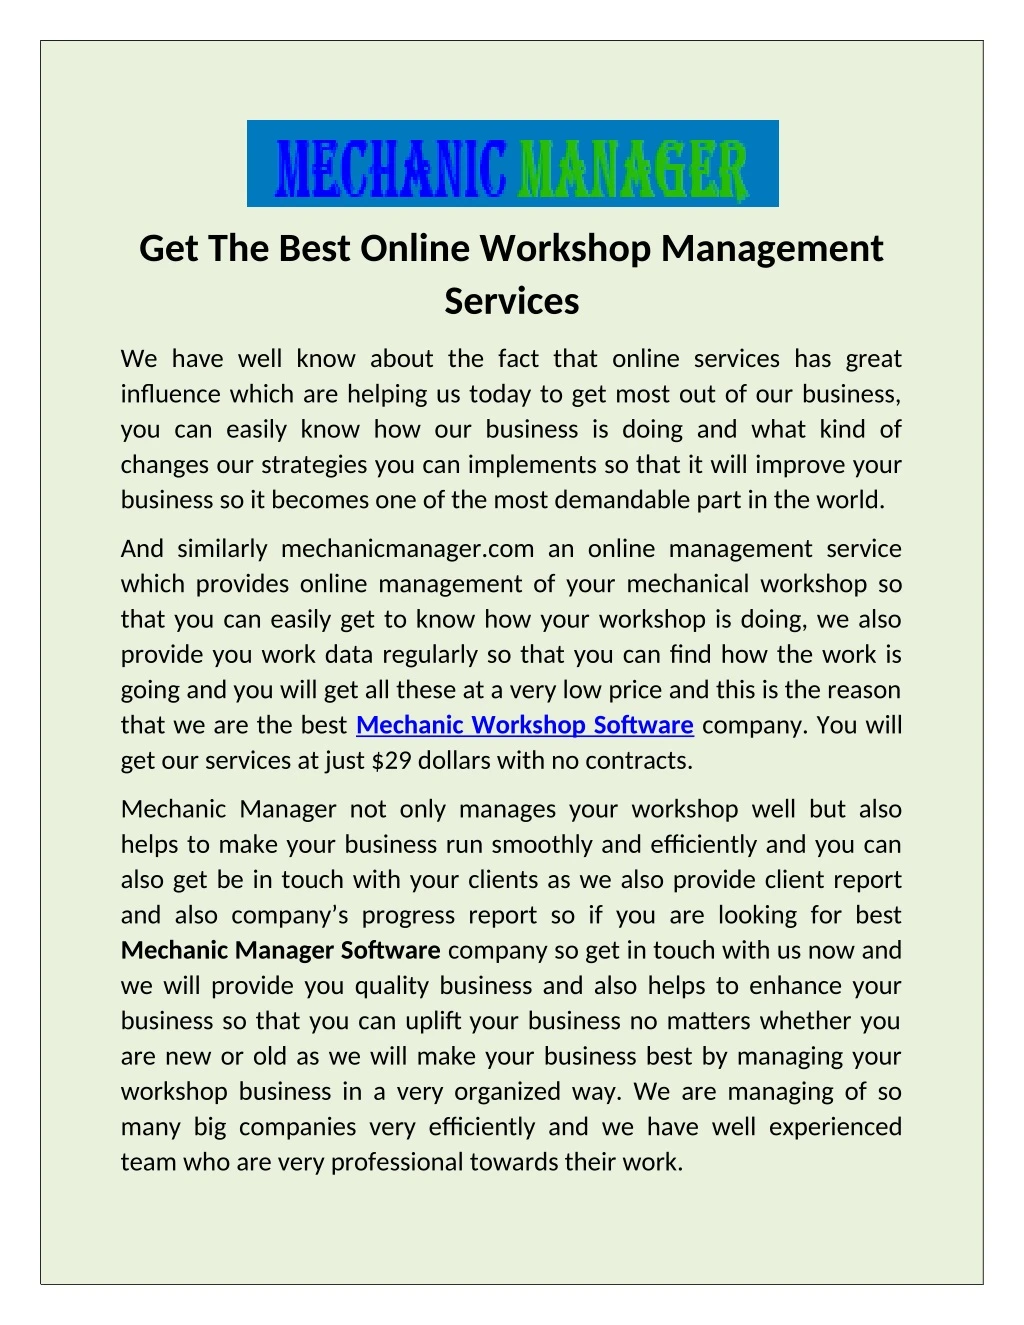 get the best online workshop management services